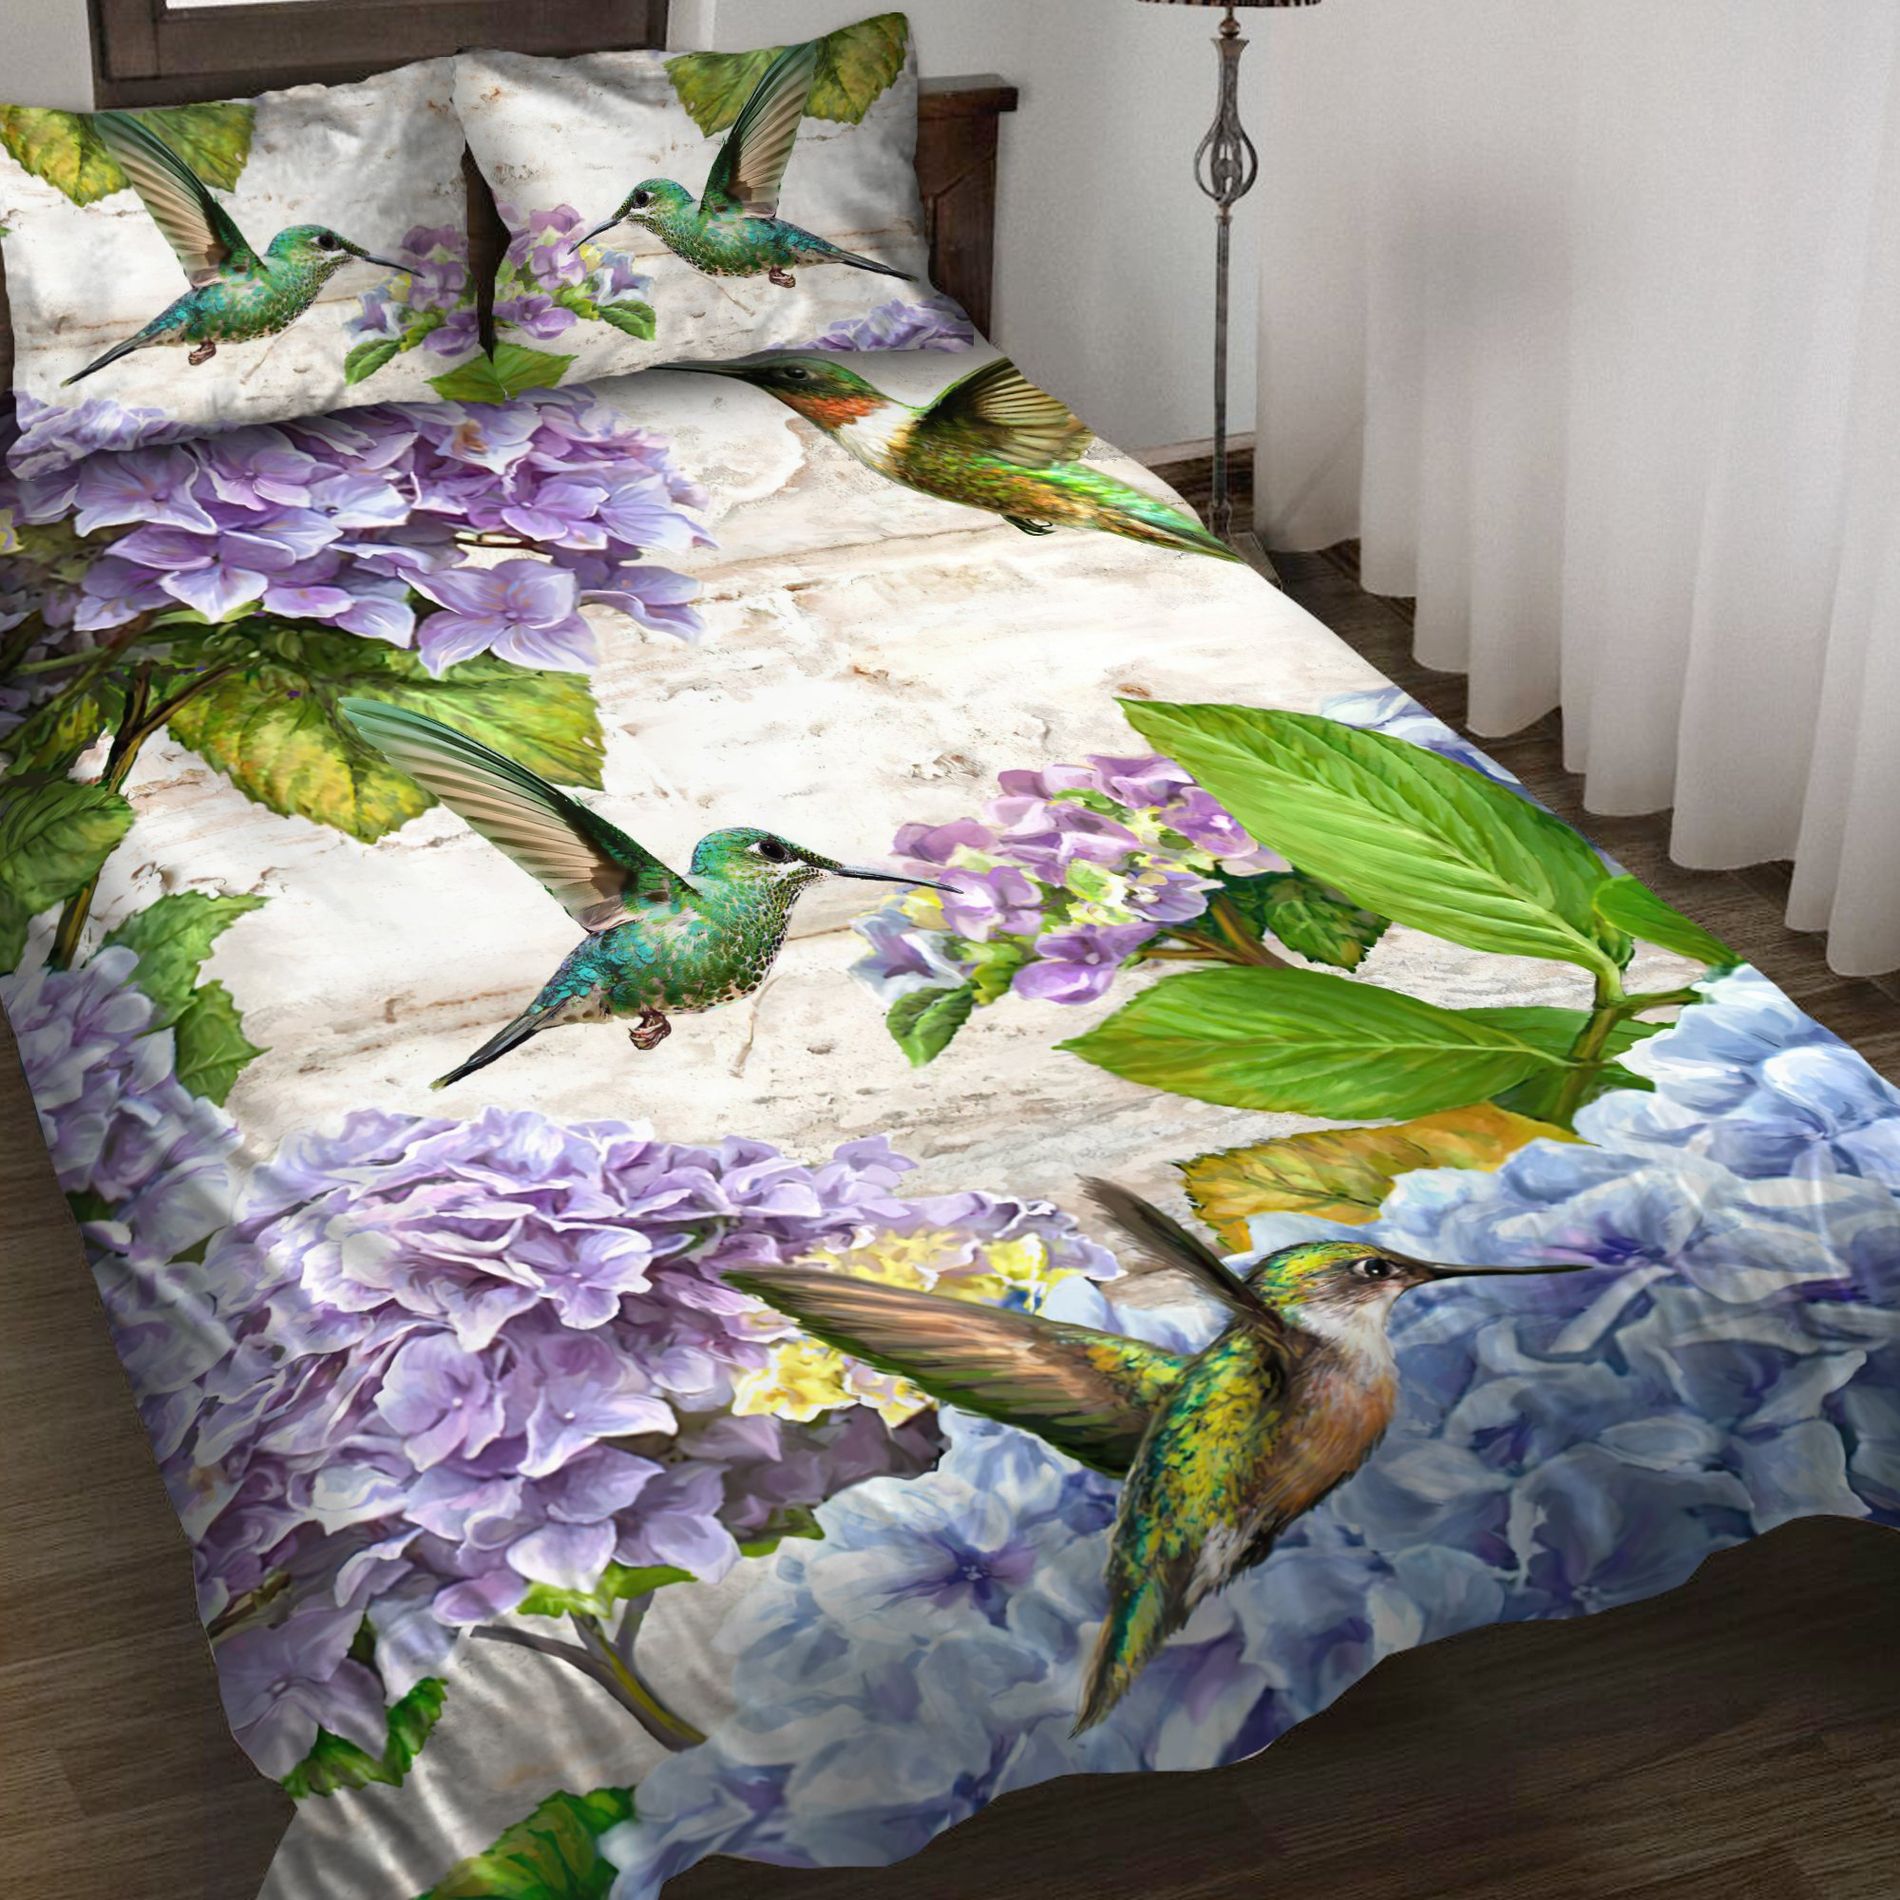 Flower & bird bedding sets